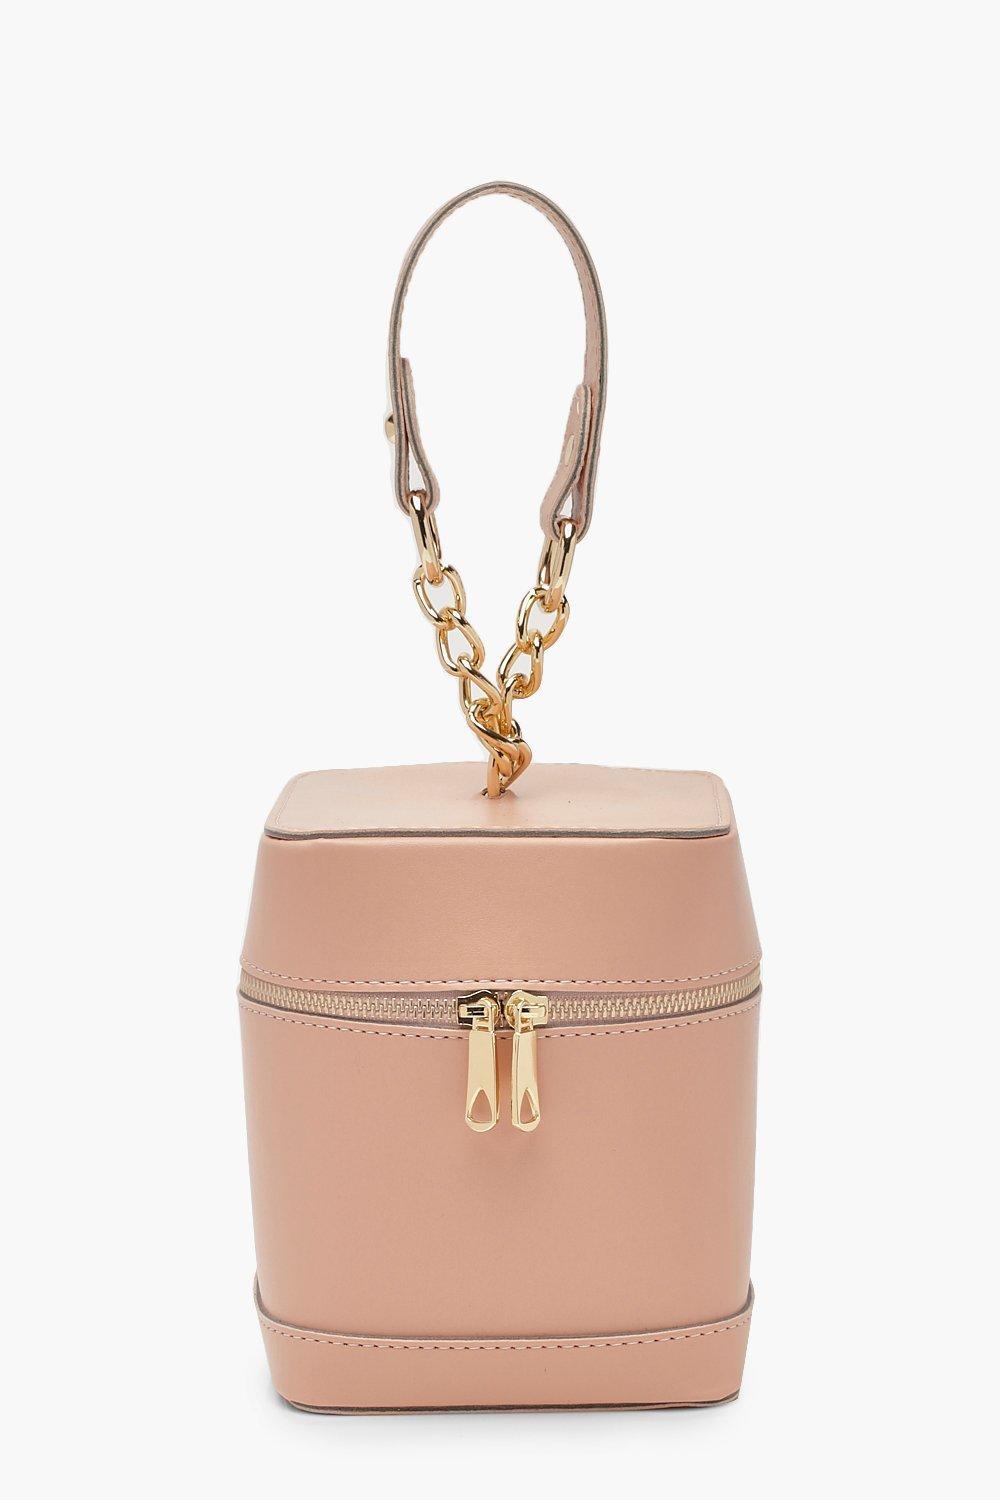 Boohoo Mini Chain Strap Box Bag in Pink - Lyst